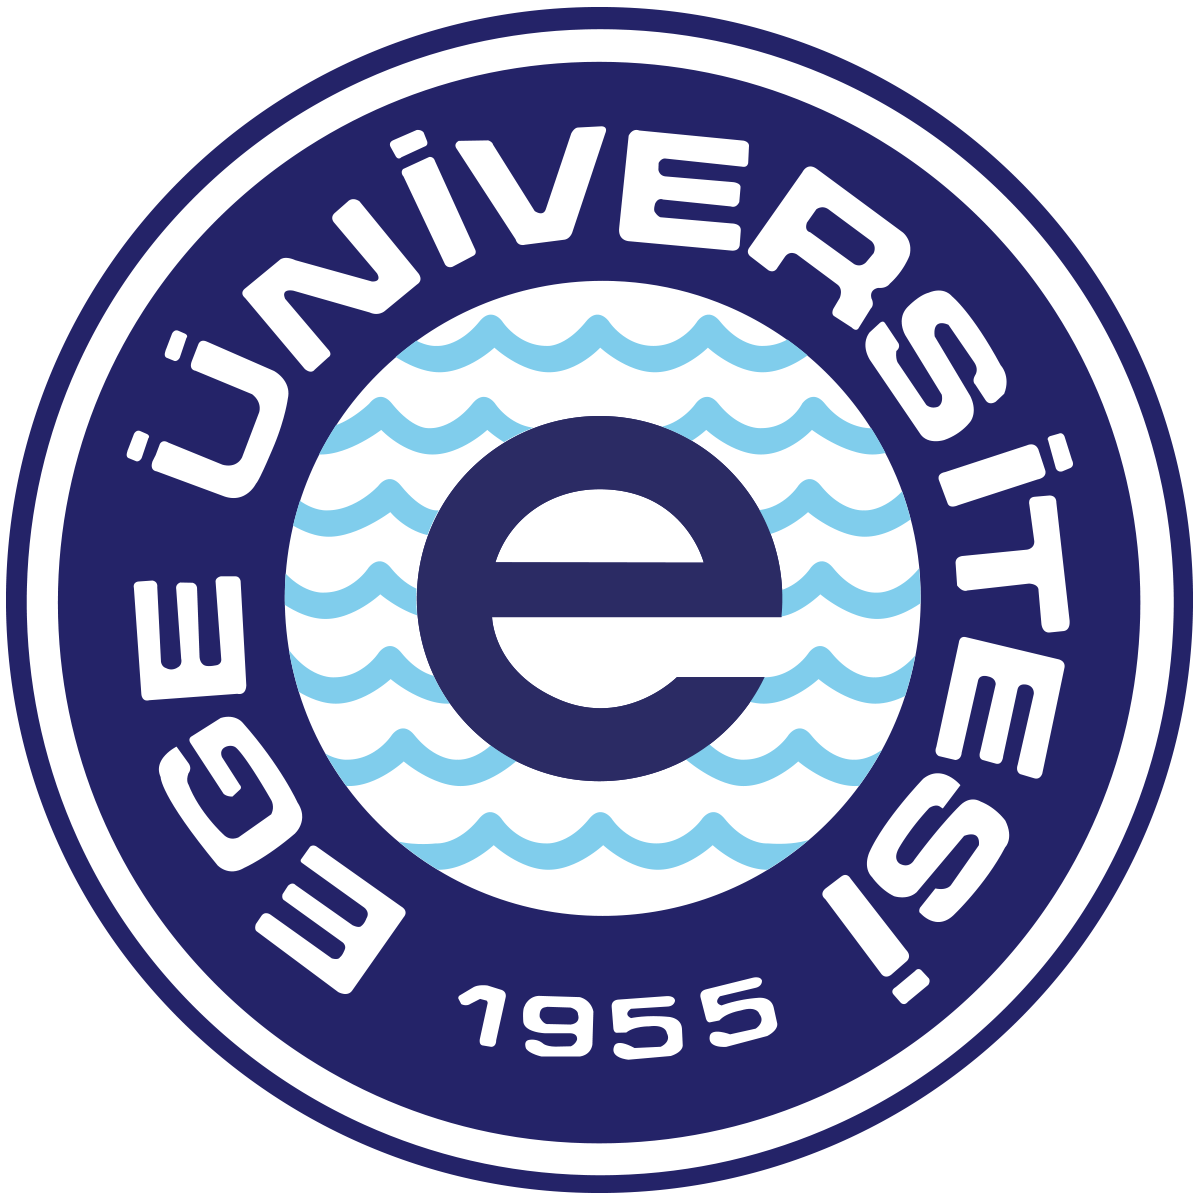 Study in Ege University with Scholarship